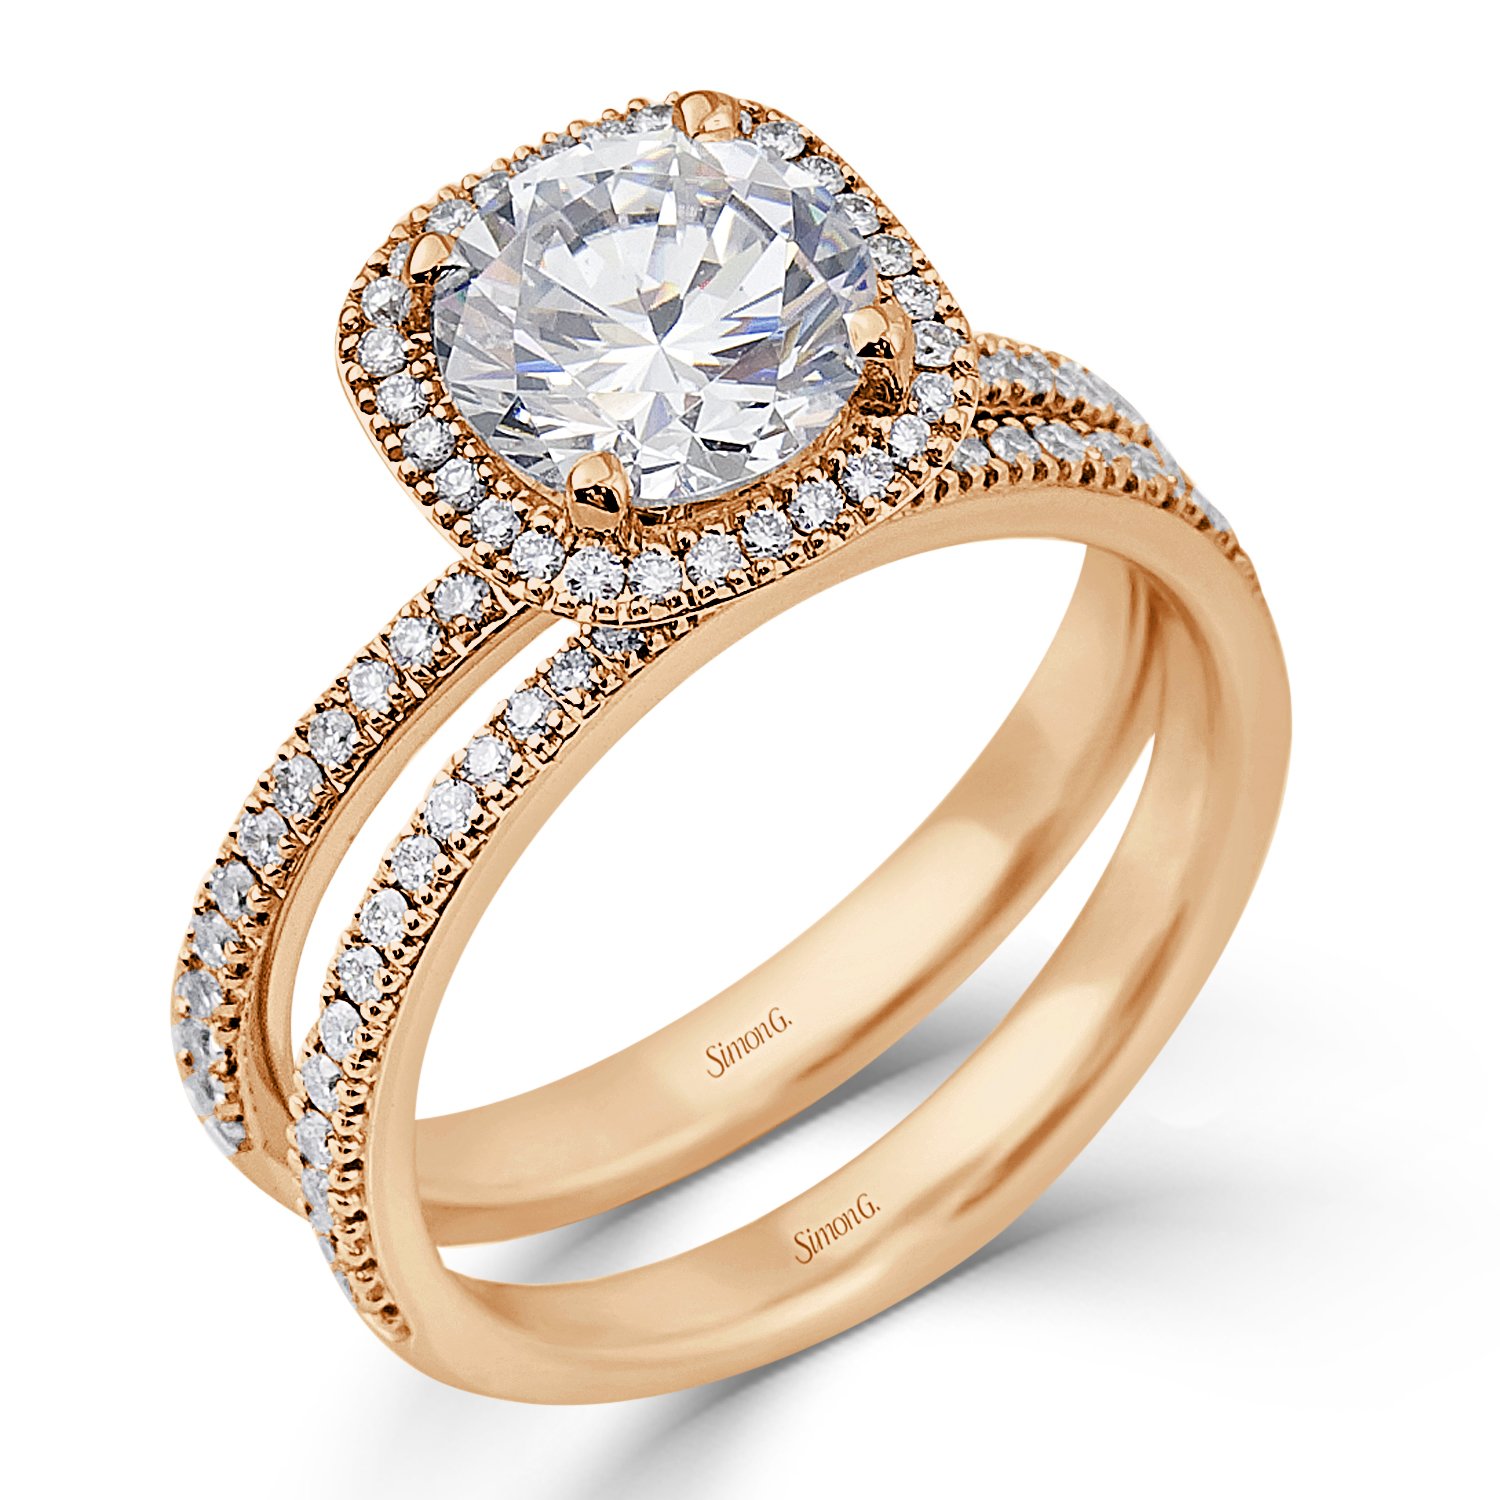 Simon G Halo 18K - White Gold Diamond Engagement Ring. Arthur's Jewelers